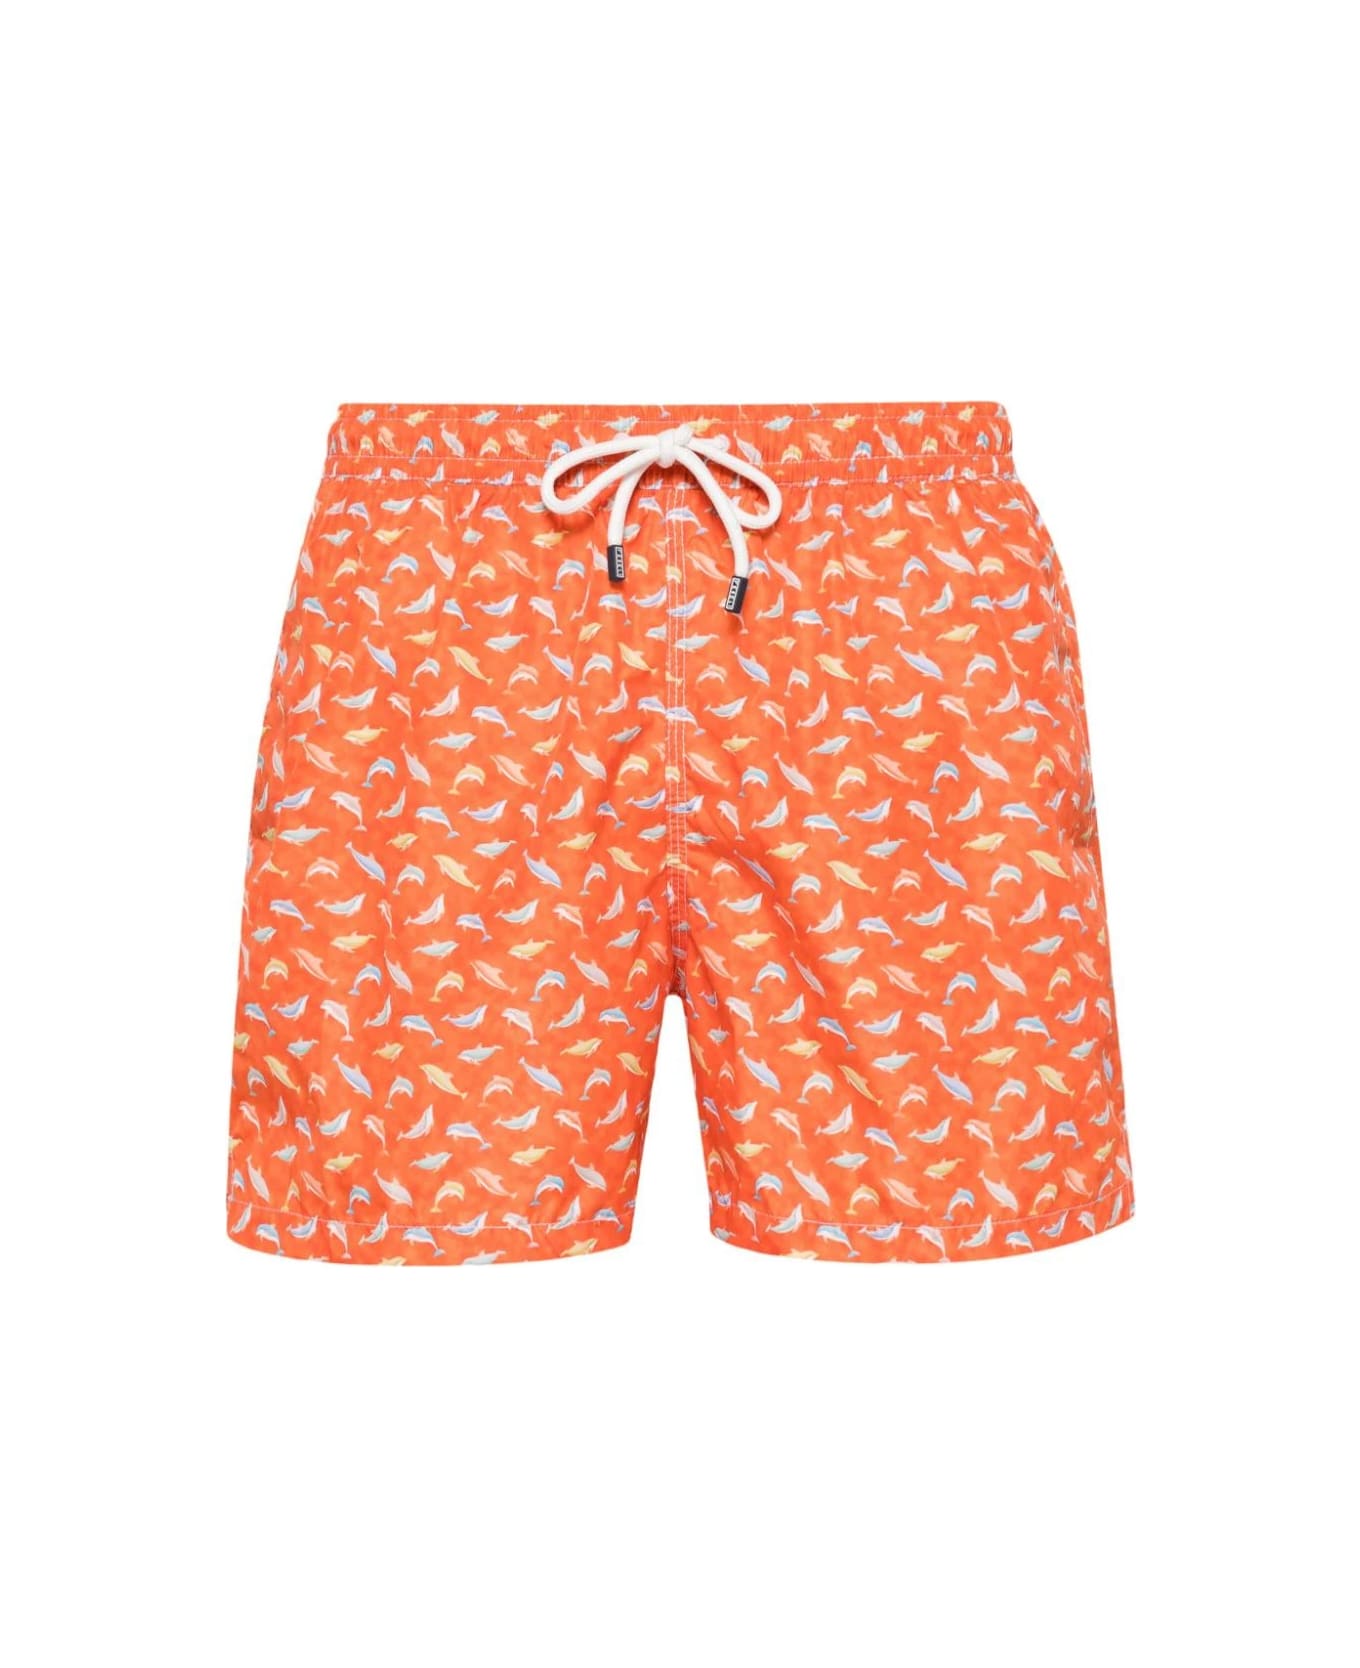 Fedeli Orange Swim Shorts With Dolphin Pattern - Orange スイムトランクス